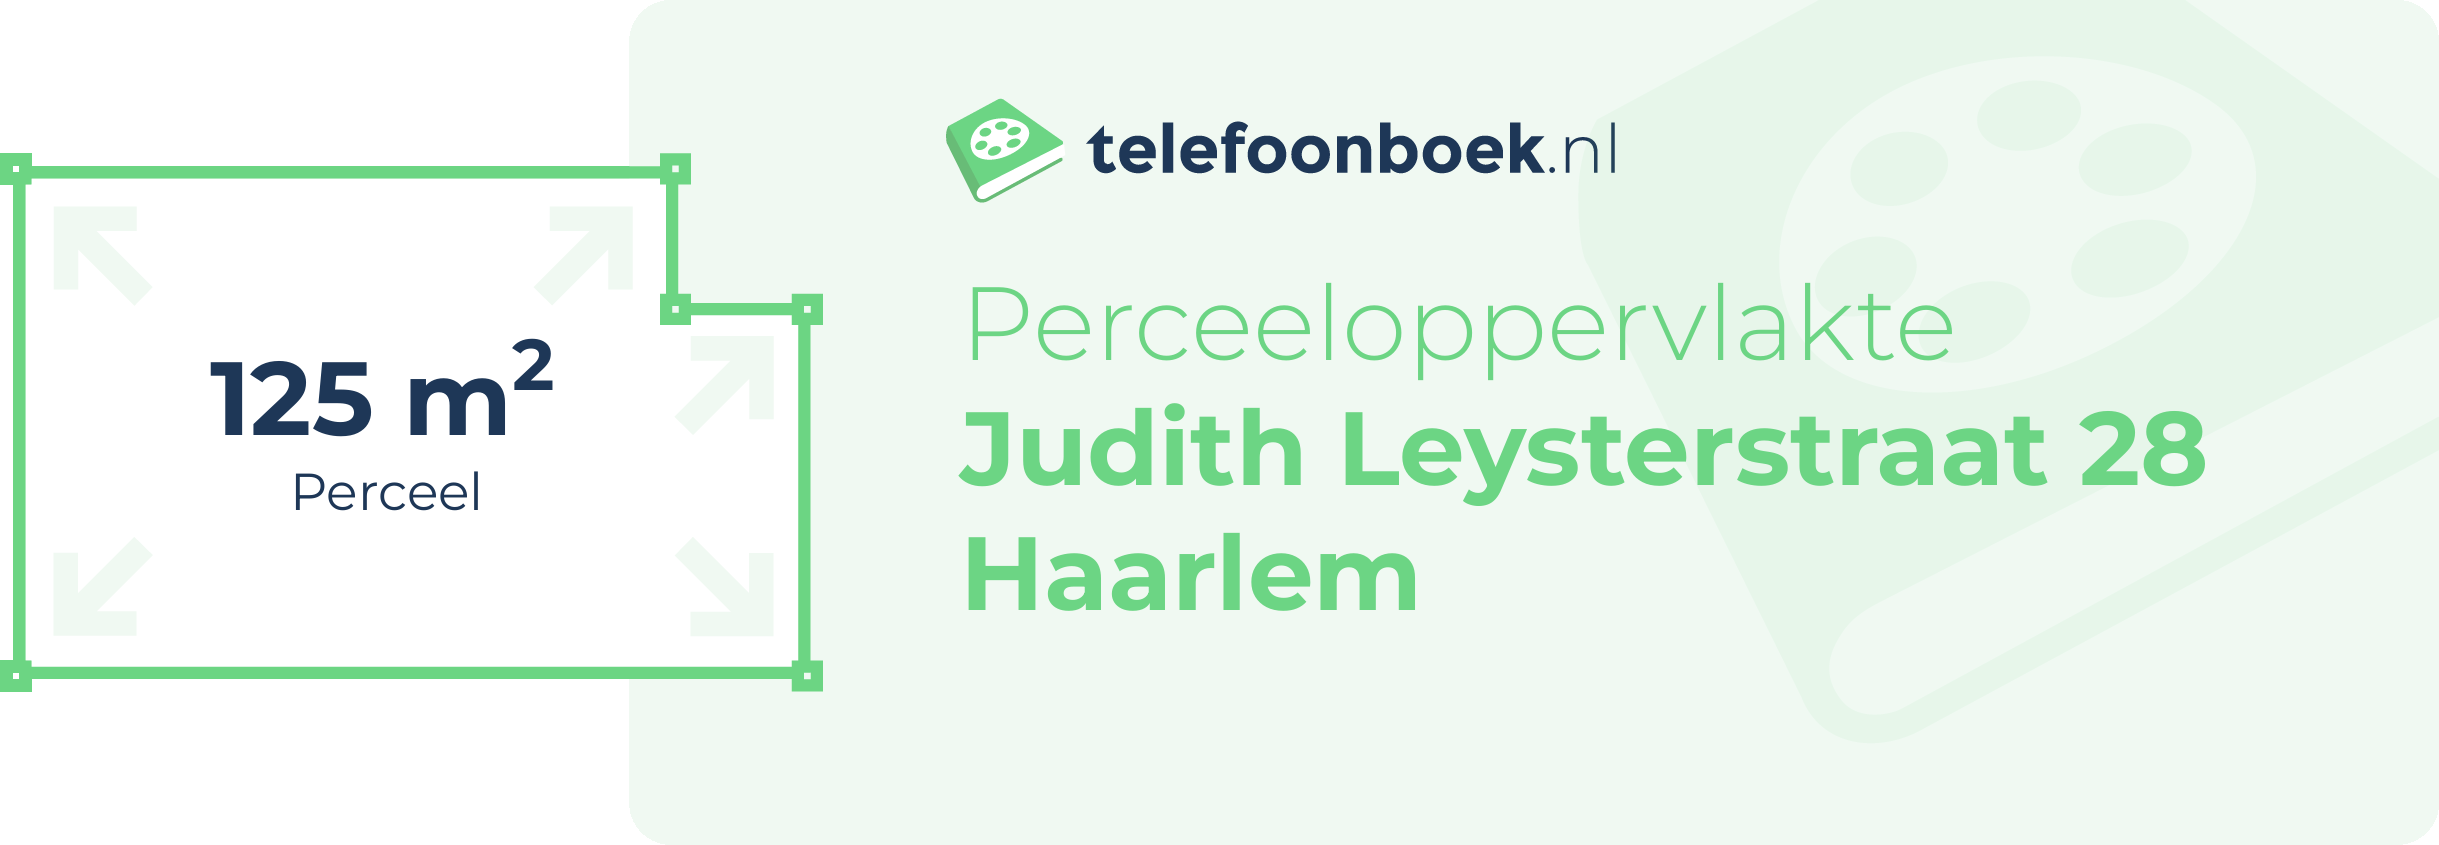 Perceeloppervlakte Judith Leysterstraat 28 Haarlem